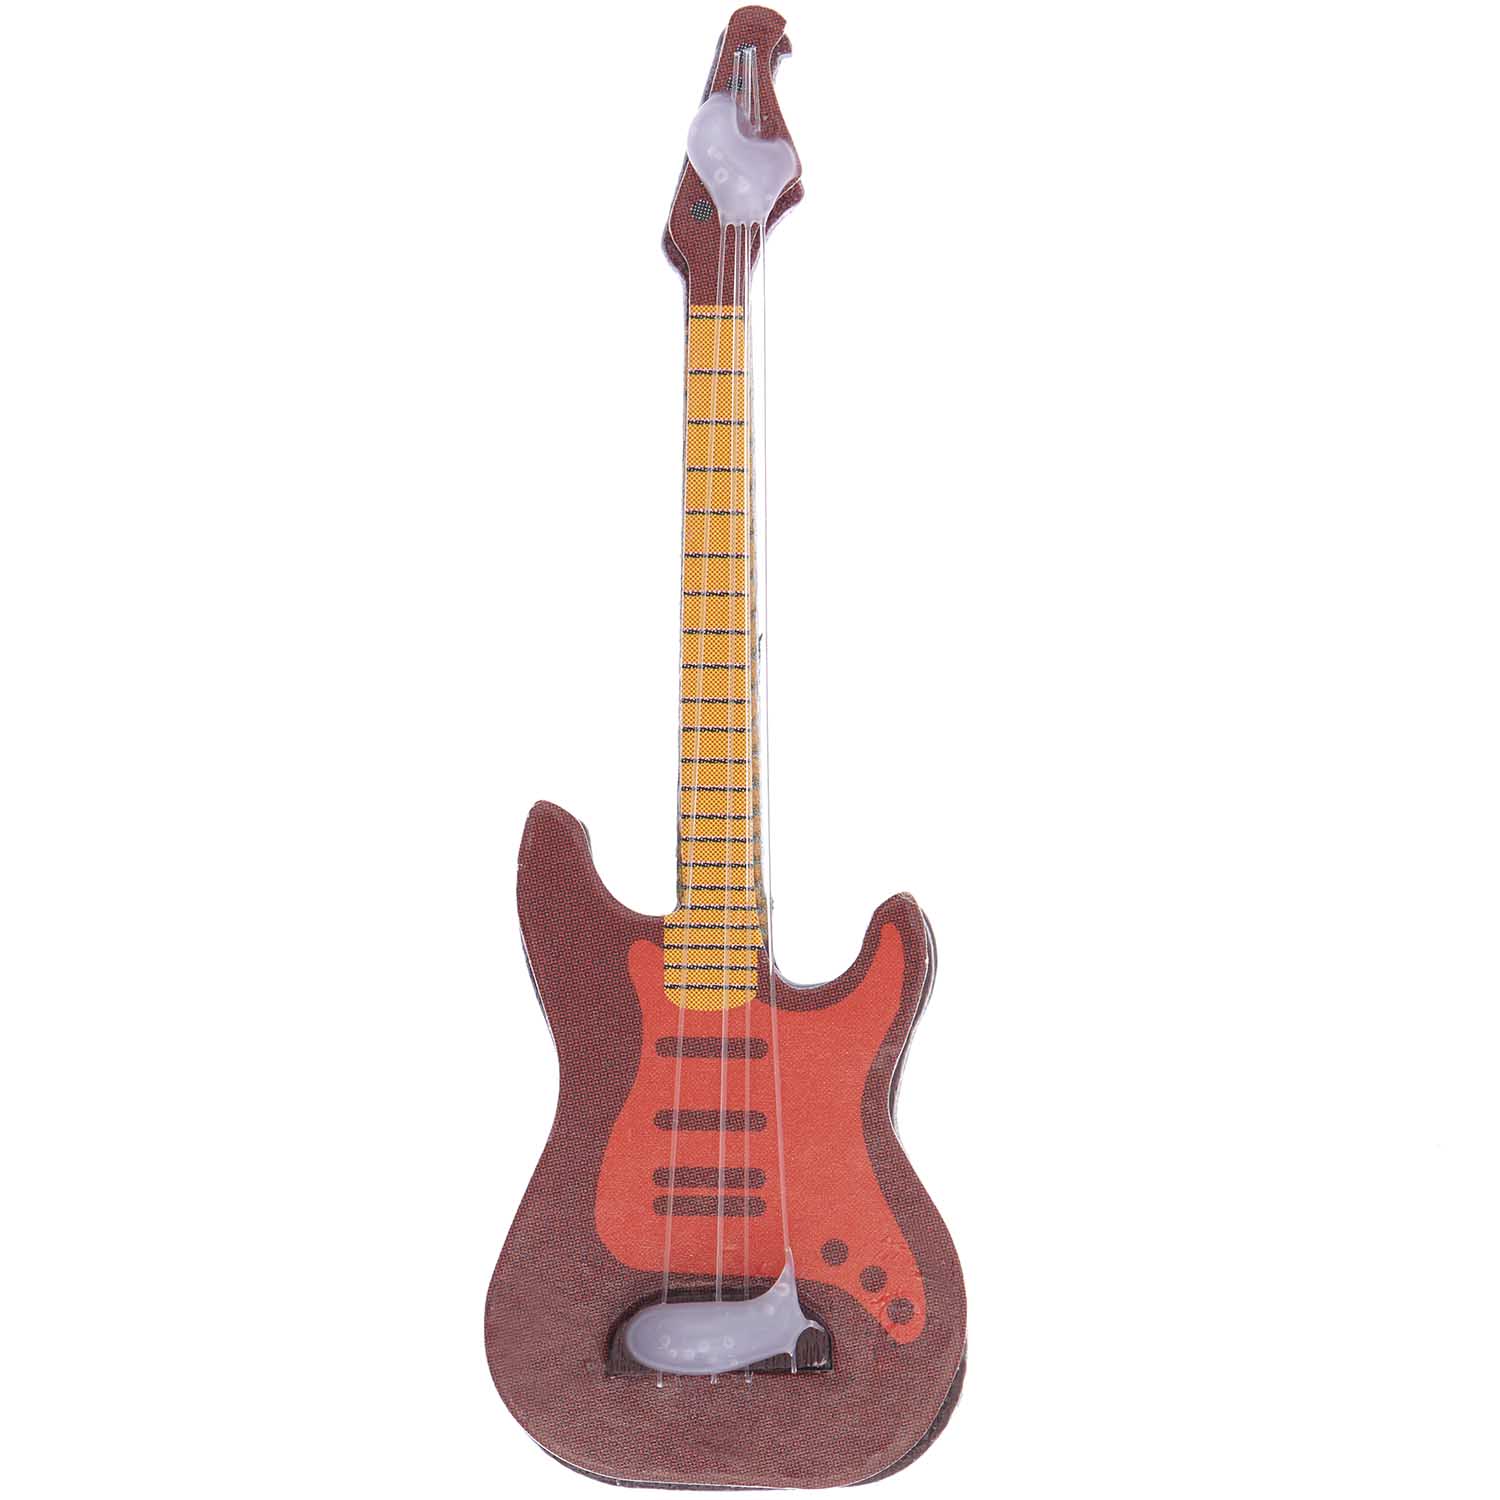 Miniatur E-Gitarre 2x6,5x1cm